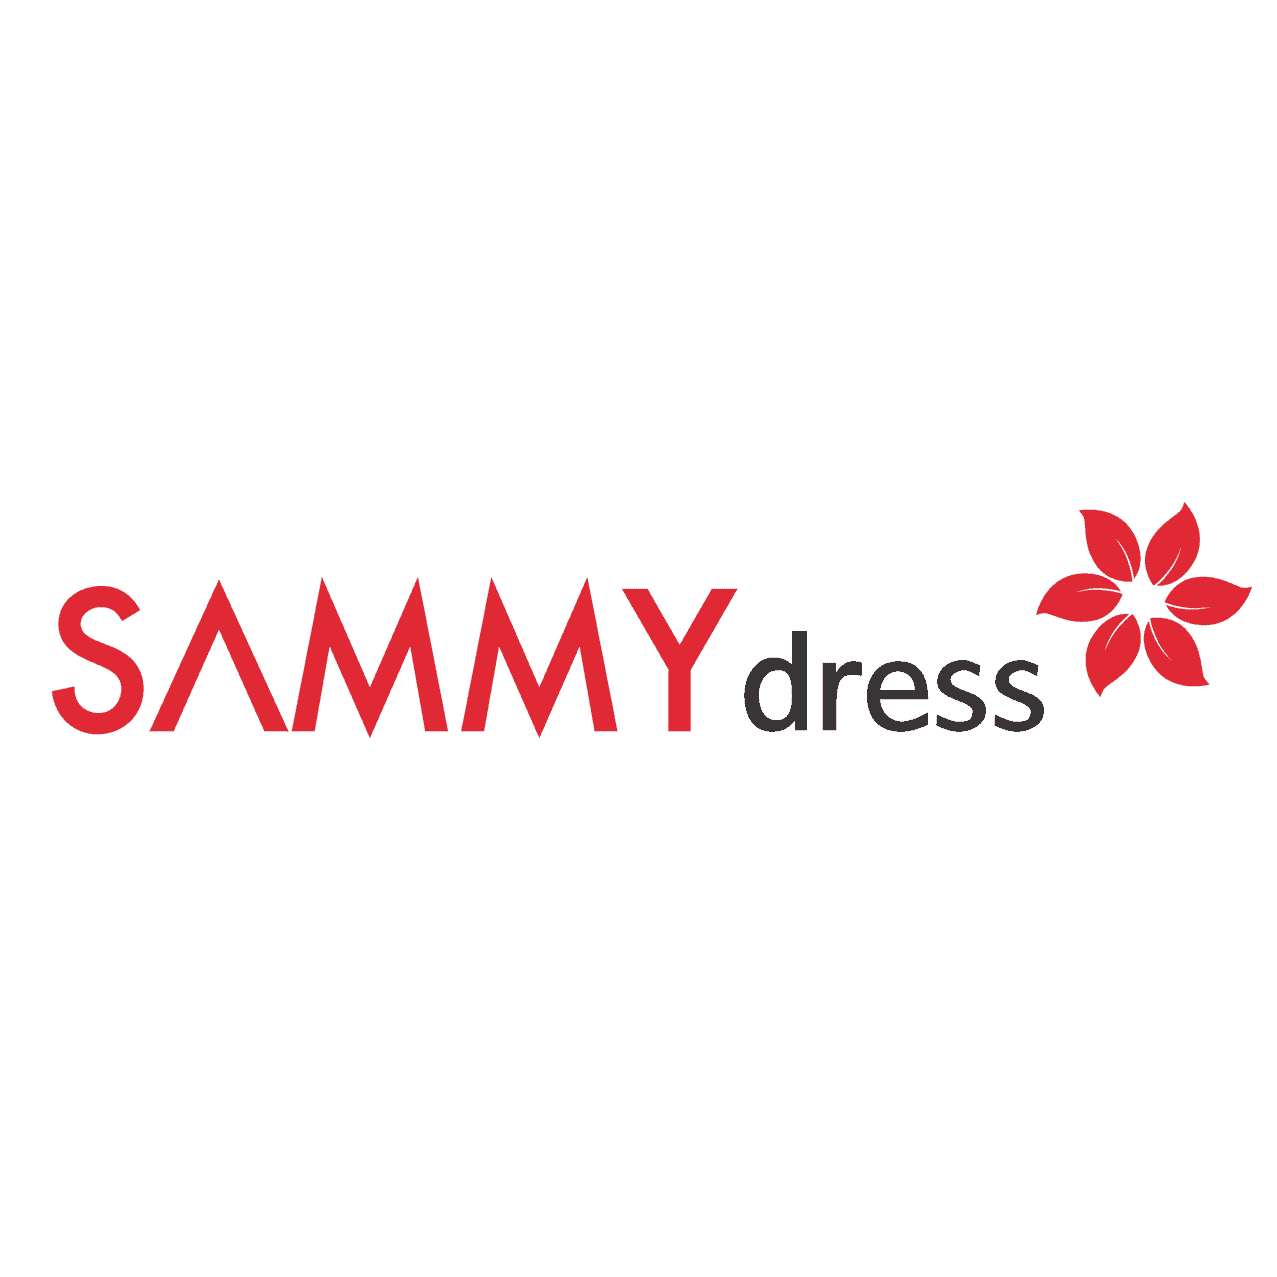 Sammy dress student discounts logo